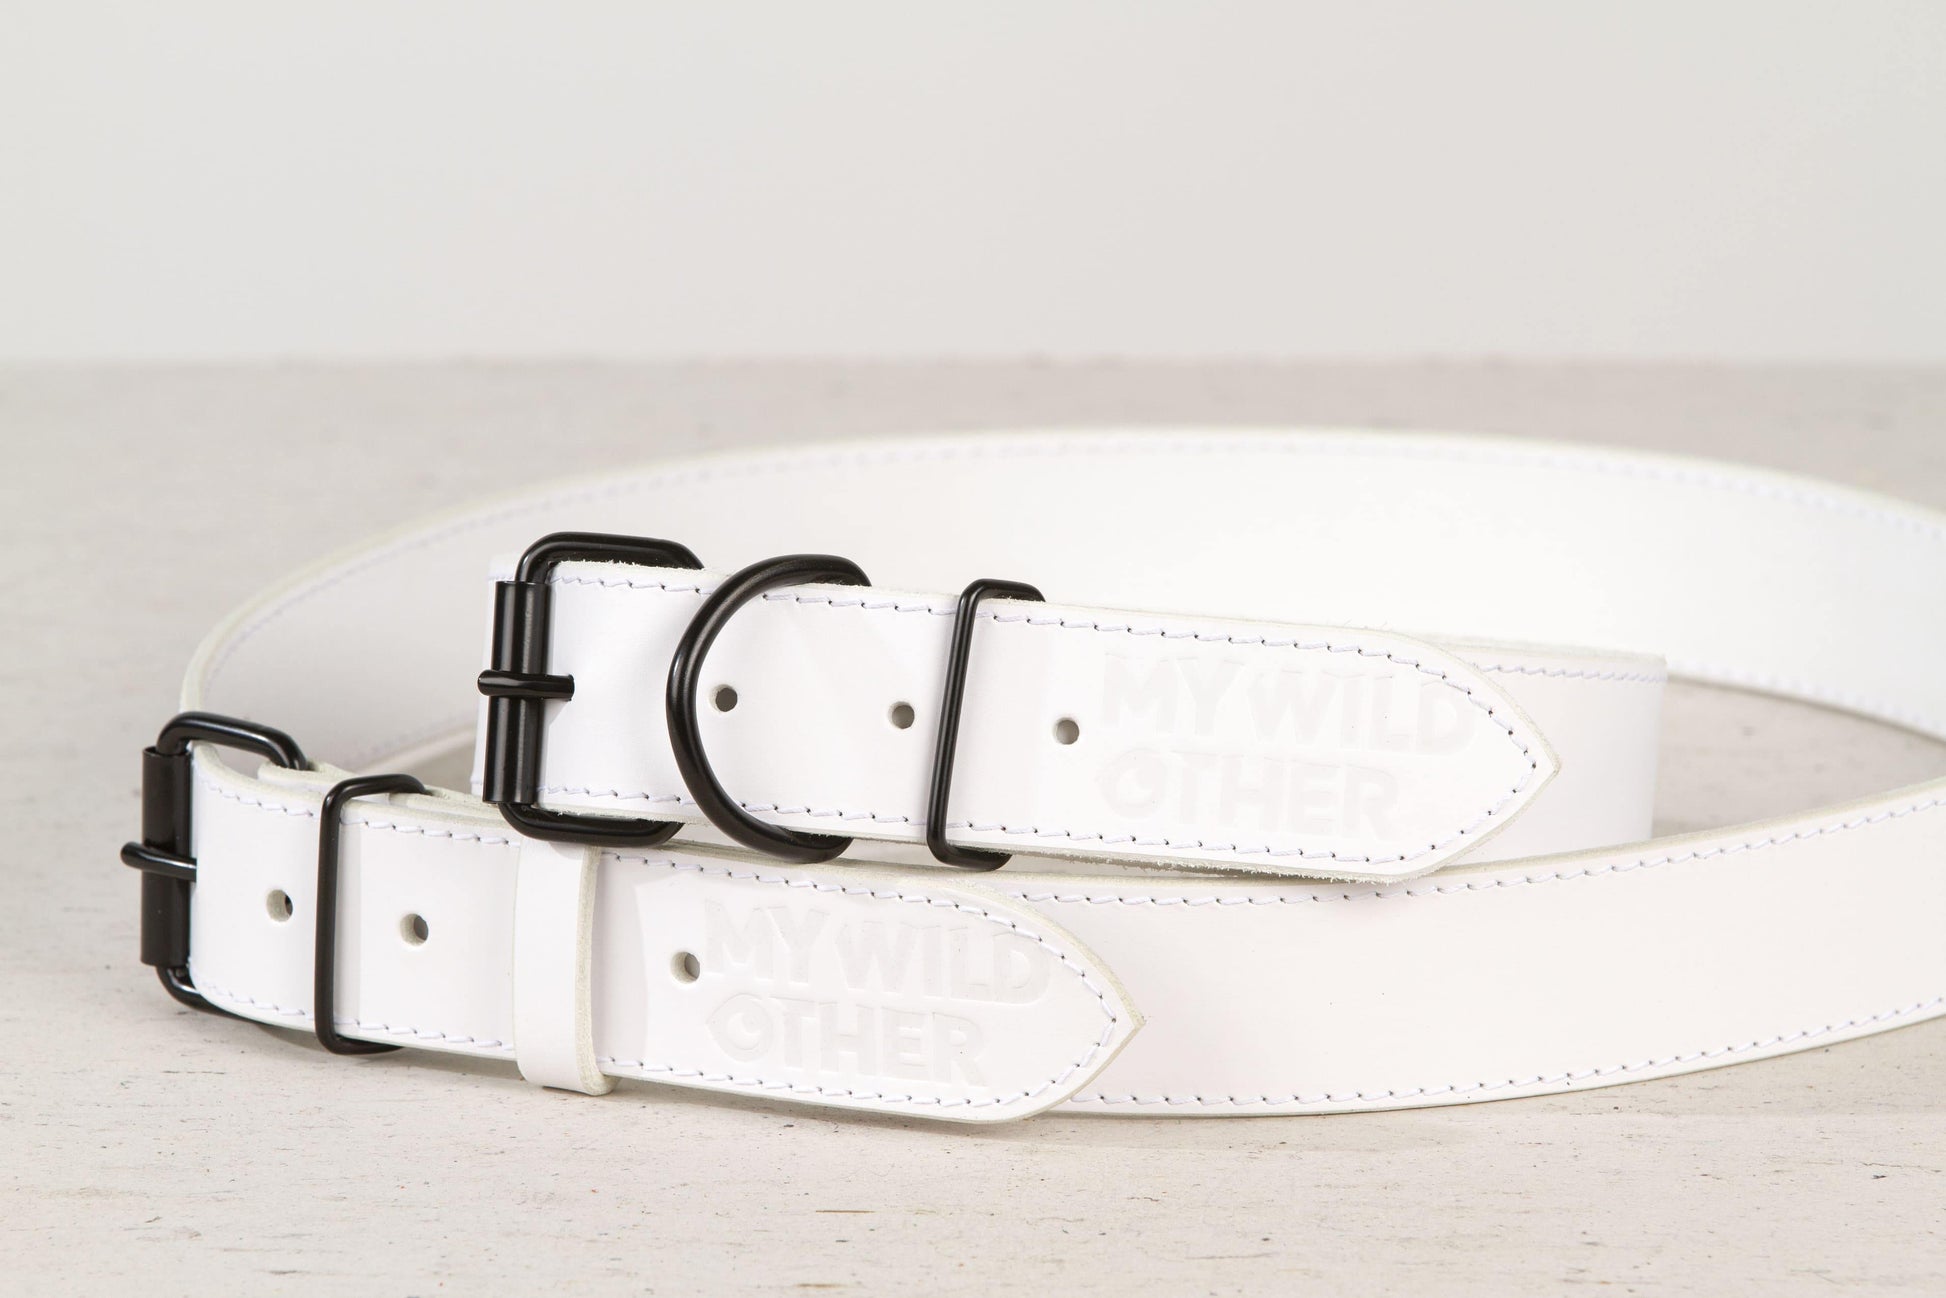 Handmade white leather dog collar - premium dog goods handmade in Europe by My Wild Other